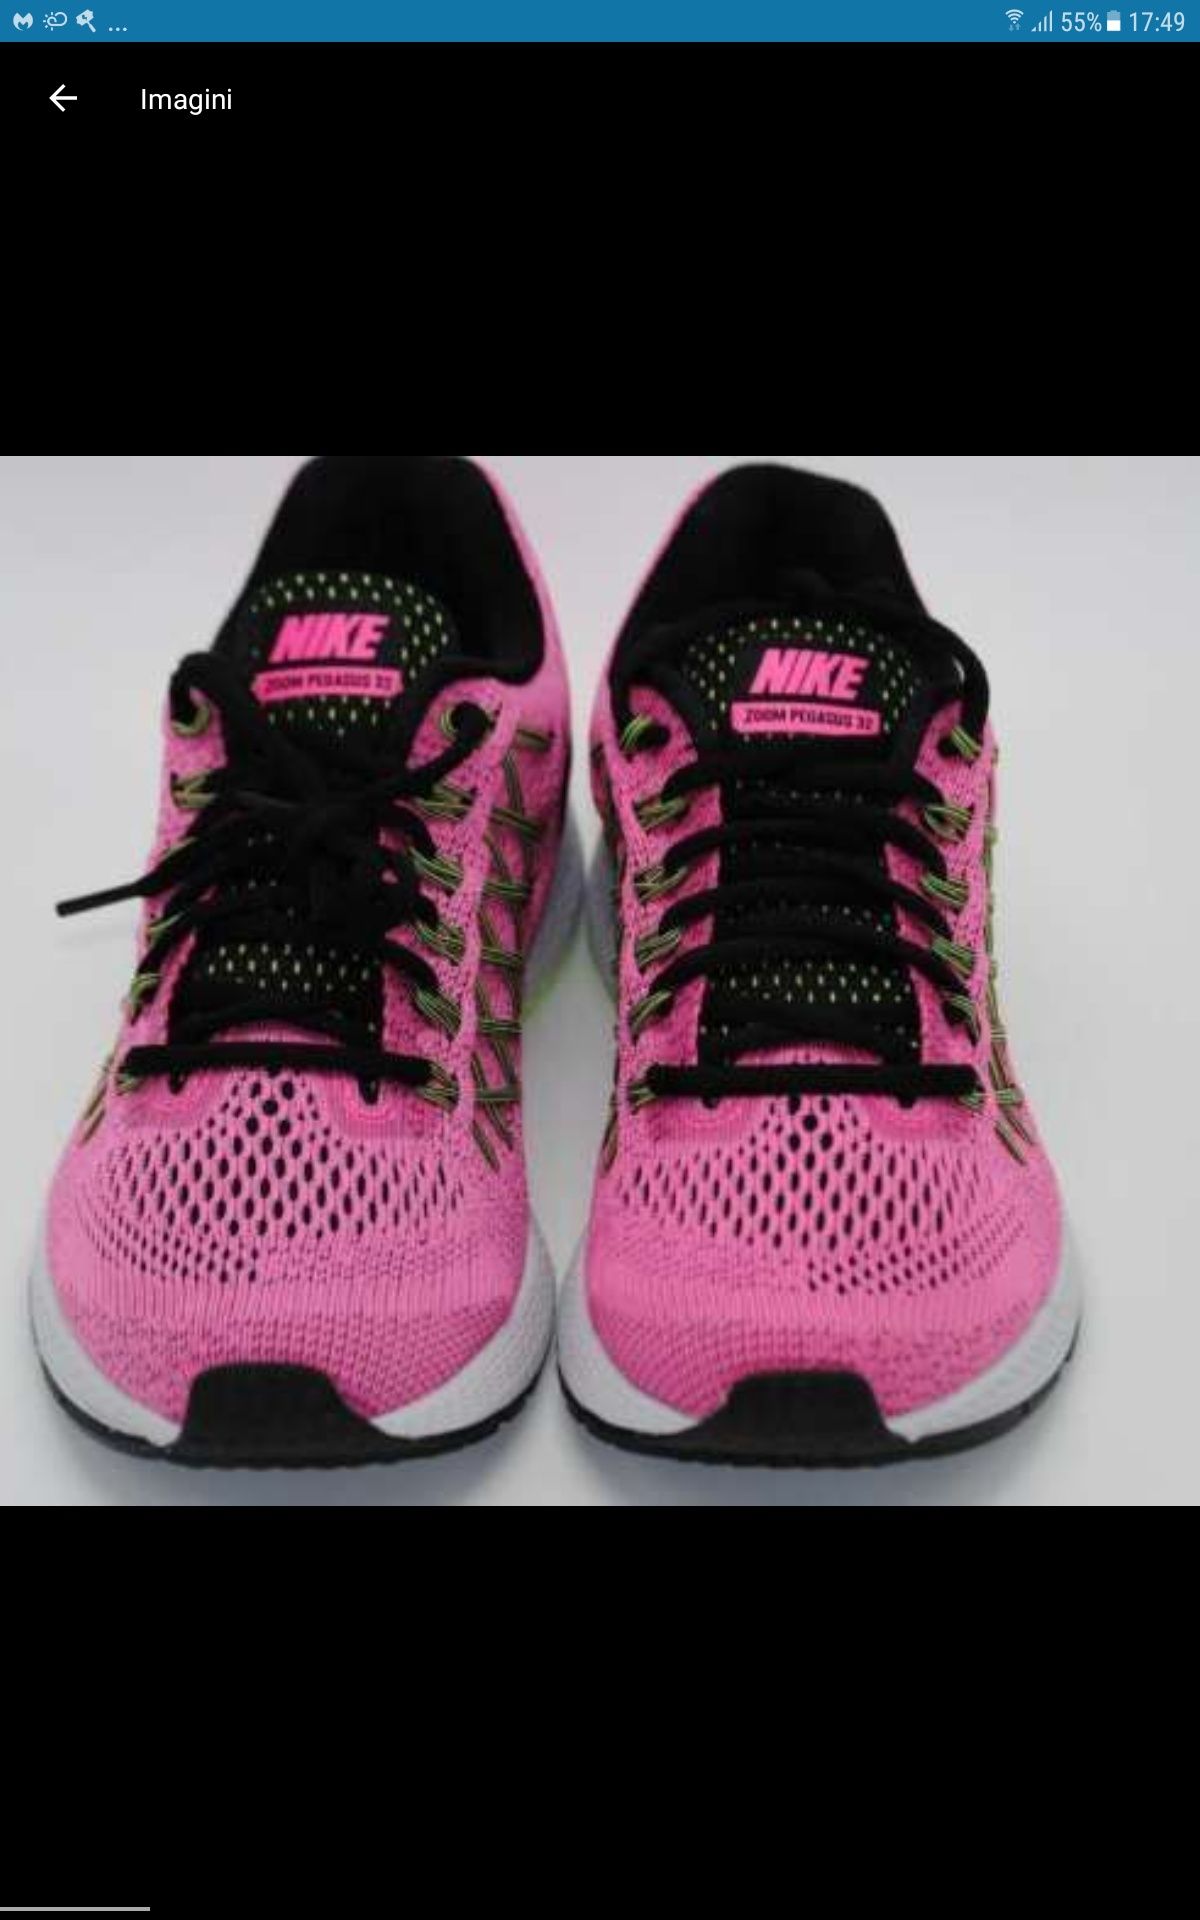 Nike Air Zoom Pegasus 32 Women's Pink